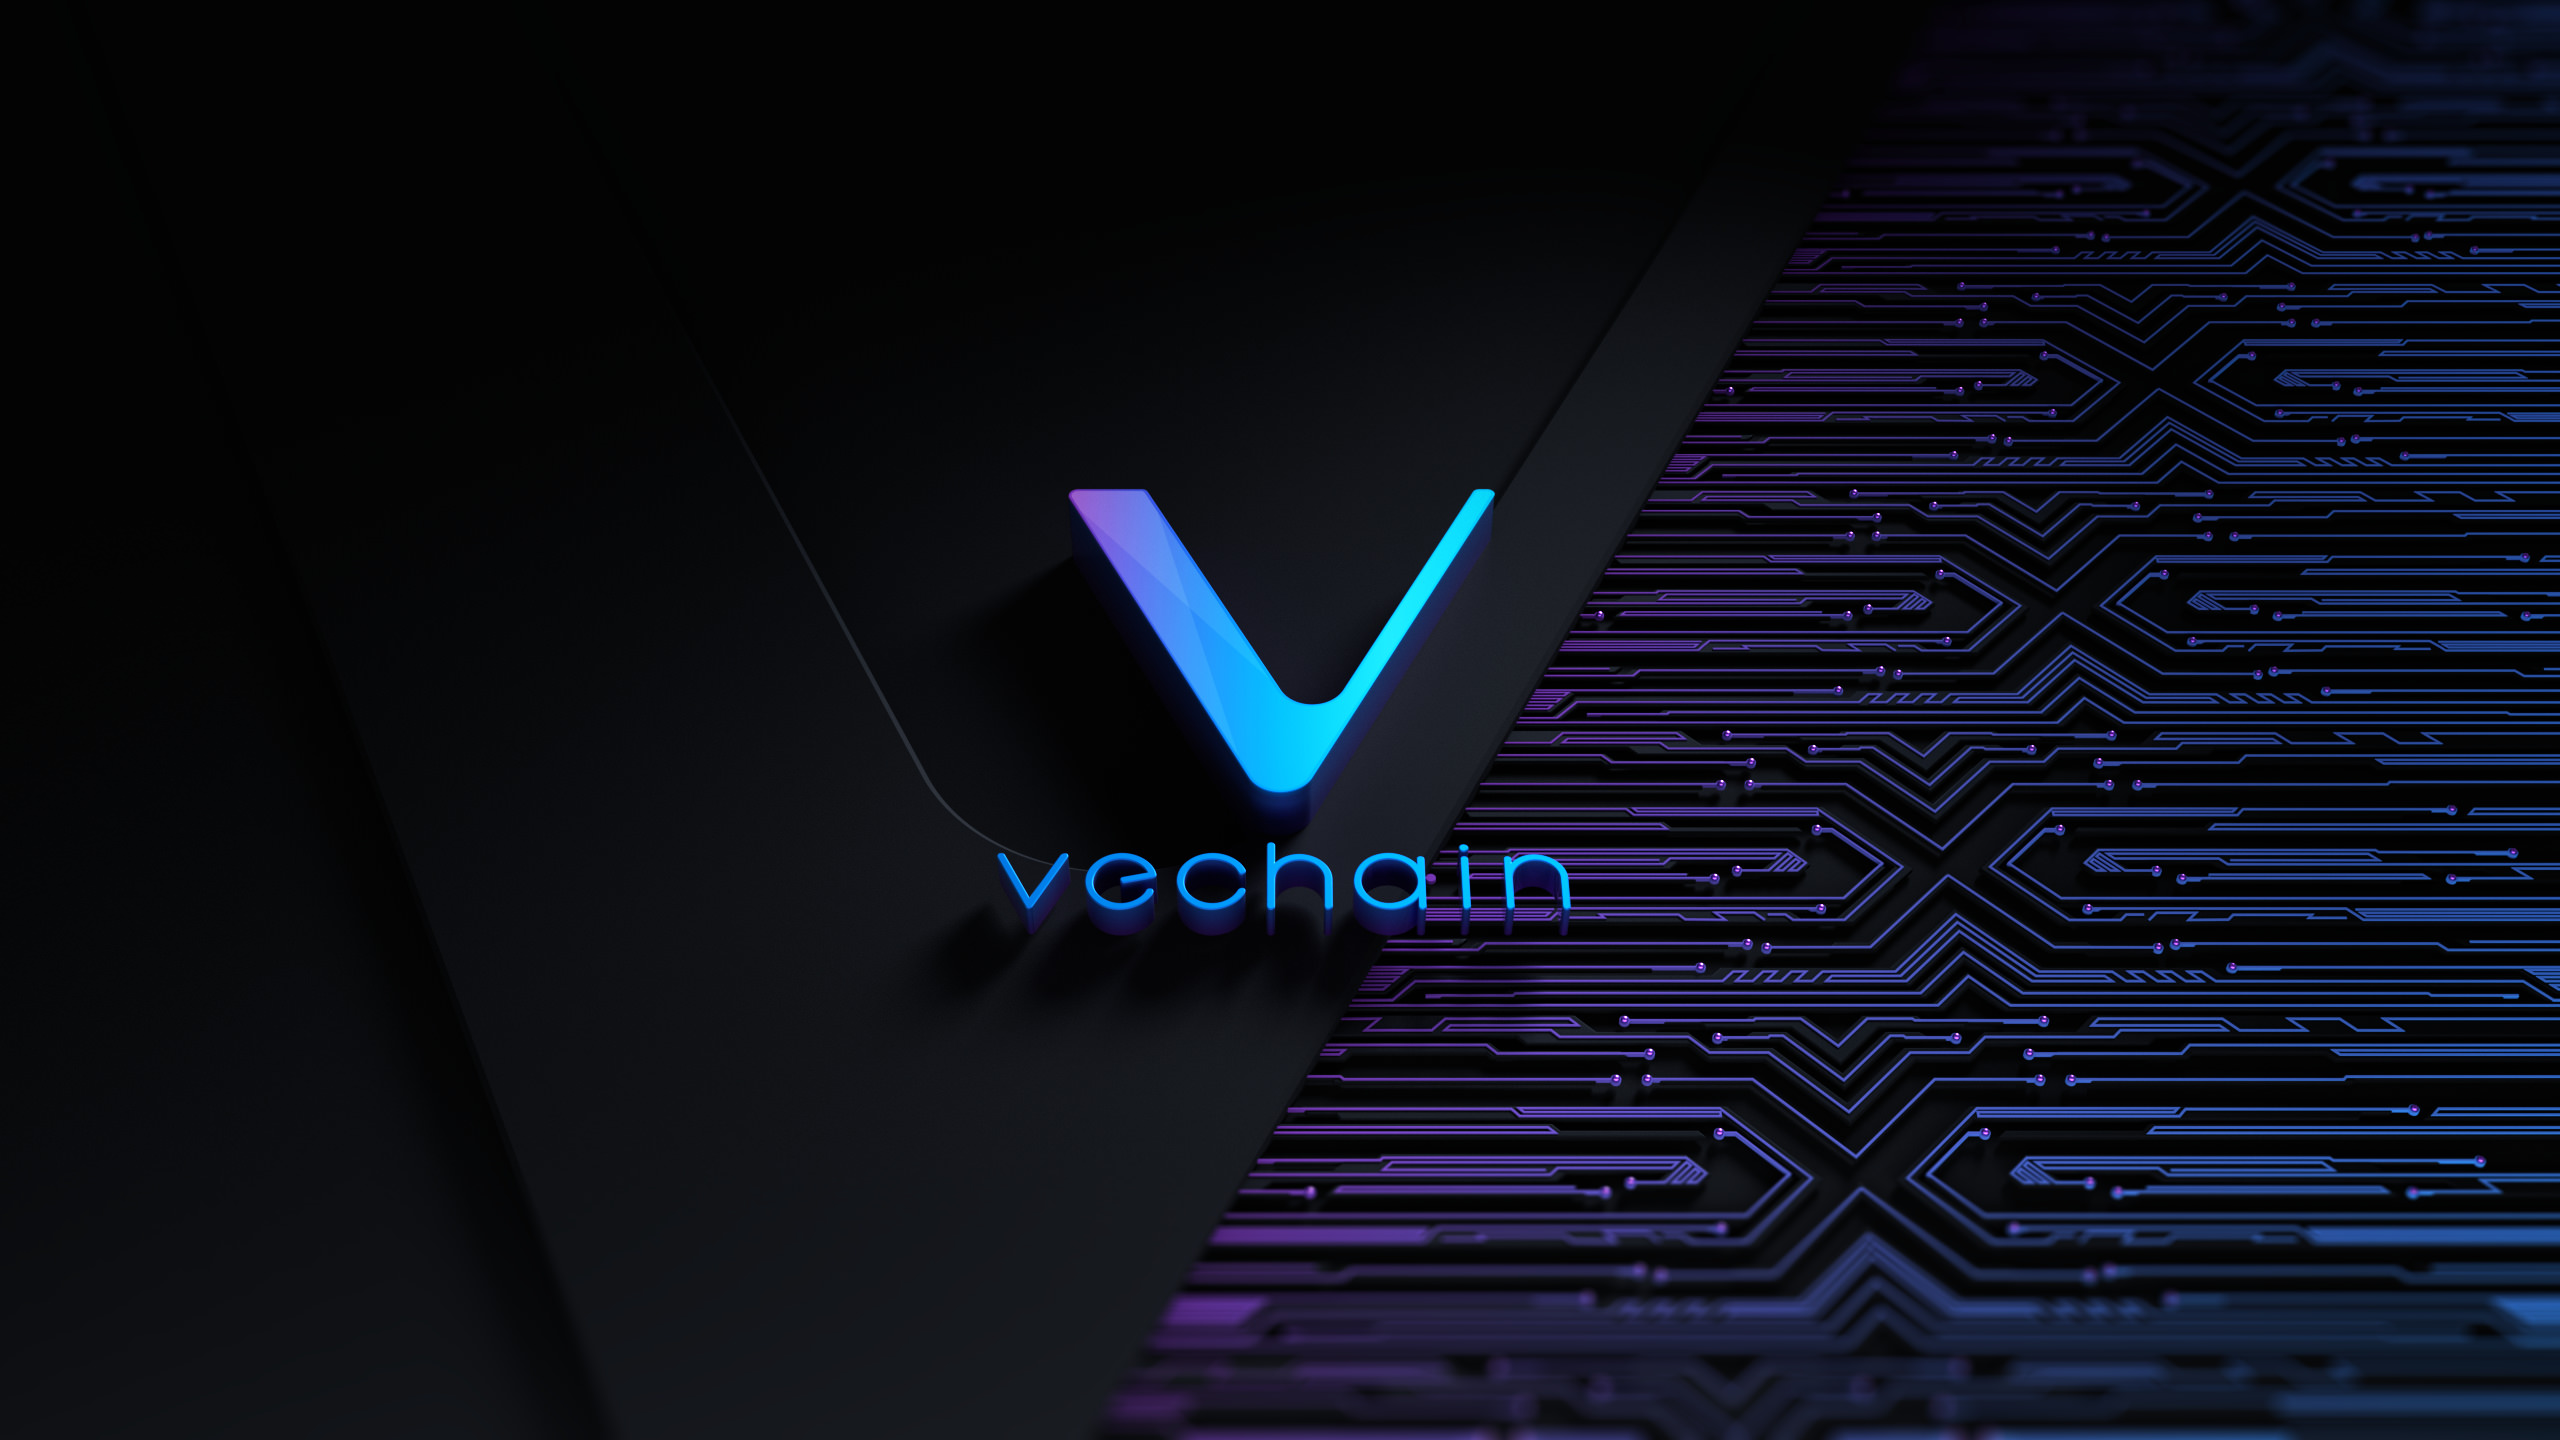 VeChain Announces a Partnership with Shenzhen Yuhongtai Foods